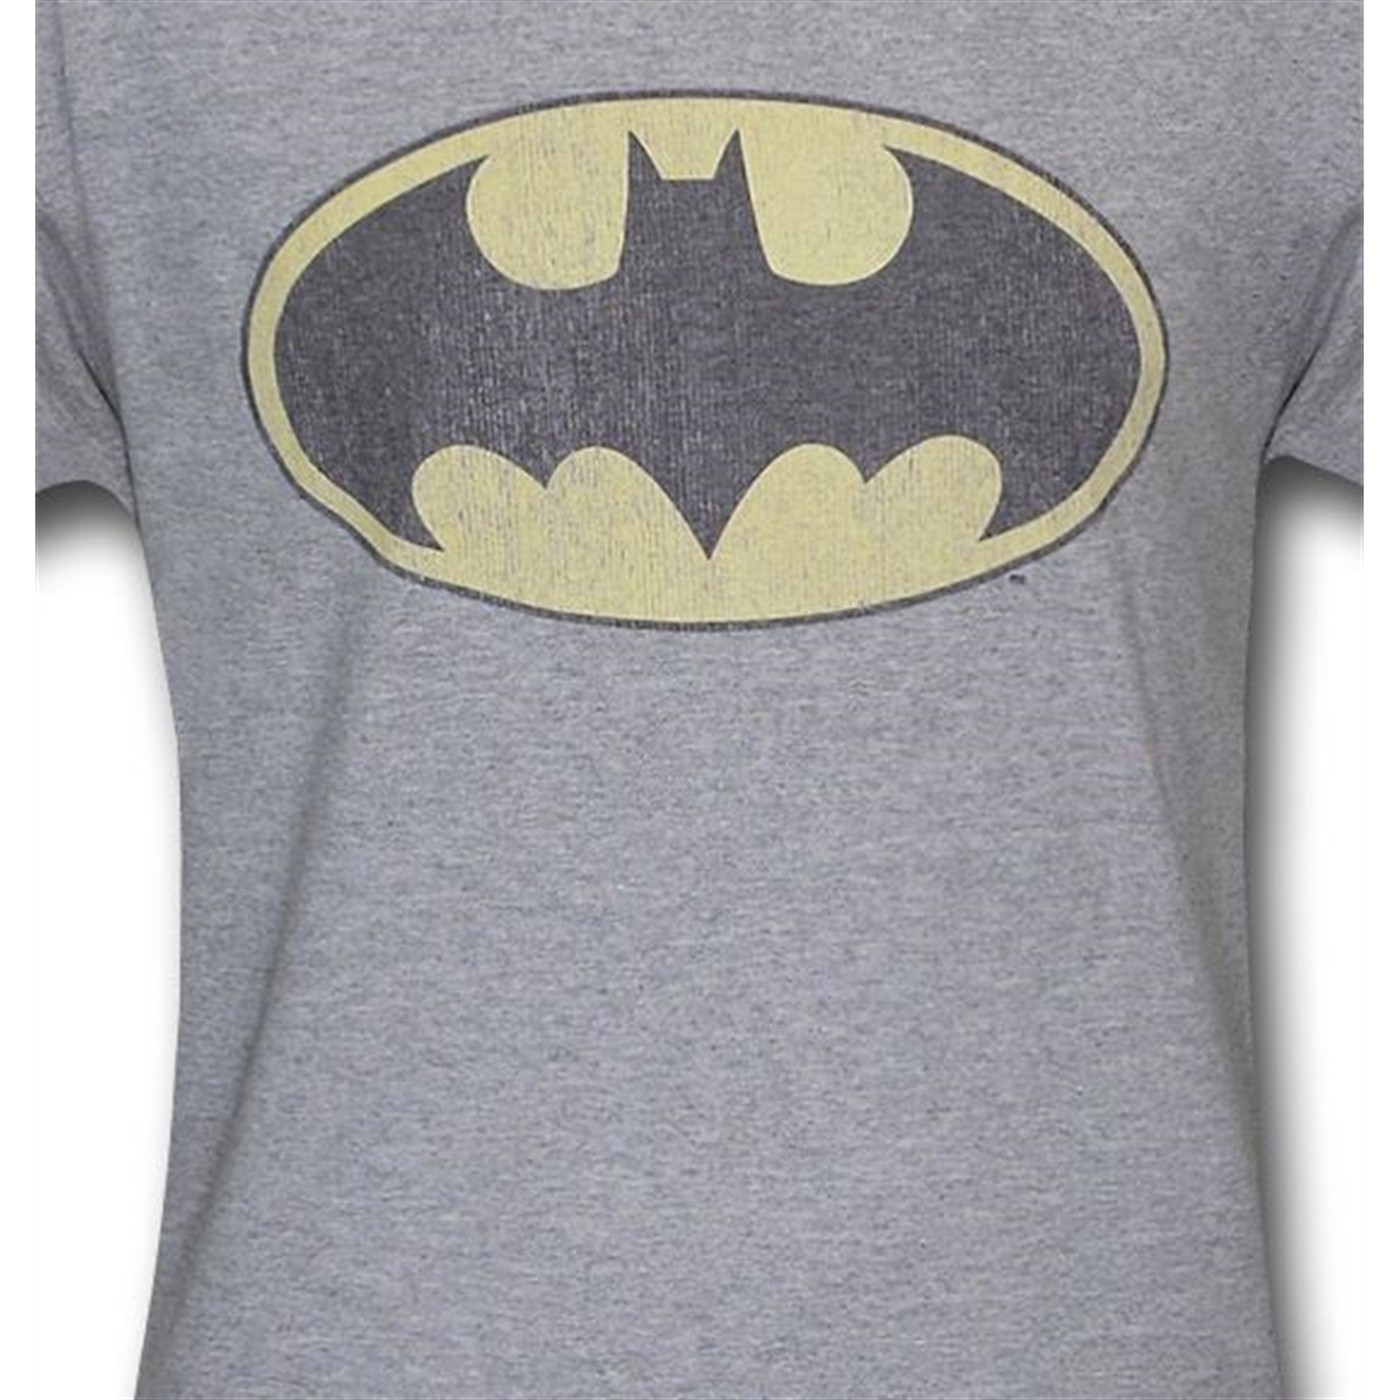 Batman Distressed Logo Heather Gray Ringer T-Shirt